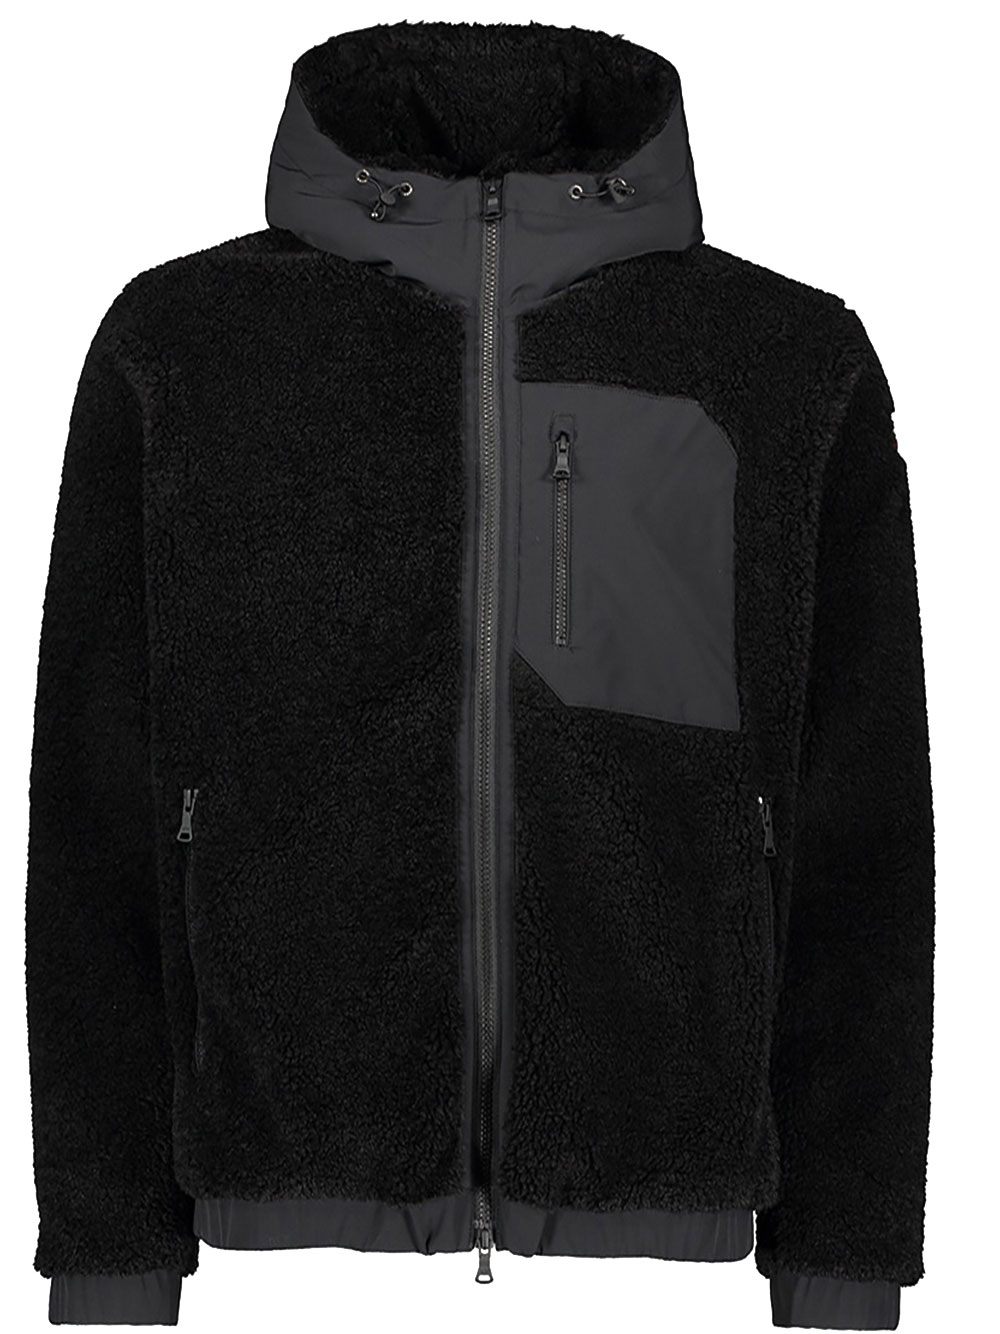 sherpa jacket